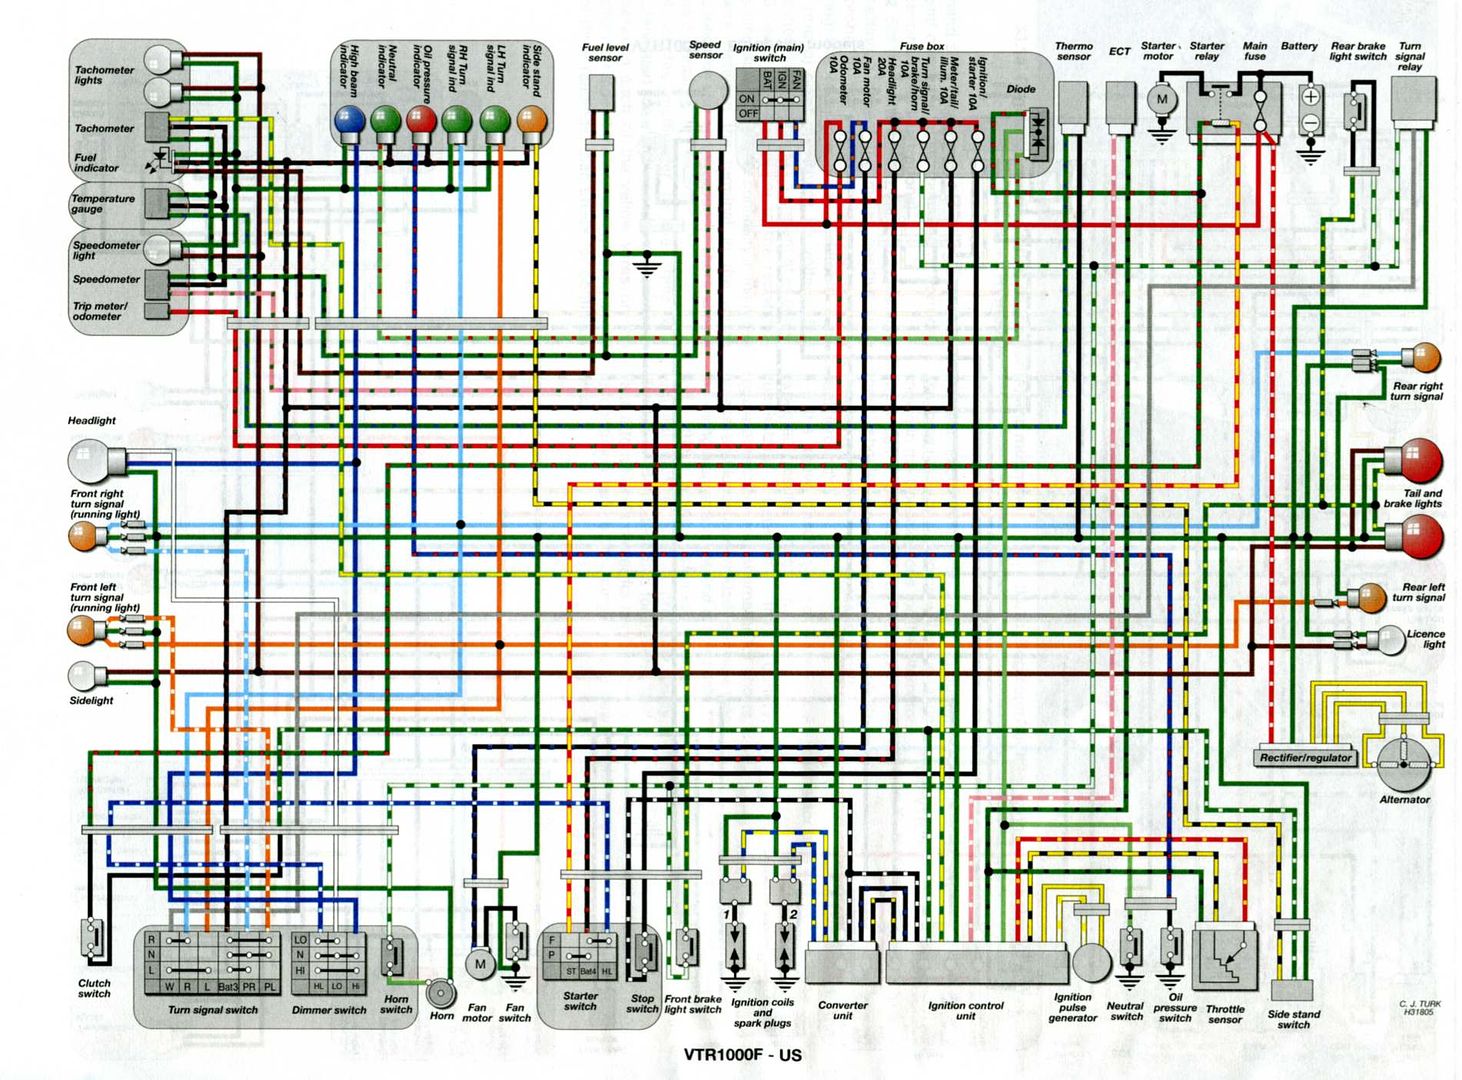 Wiring Diagram PDF: 2003 Cbr 600 Wiring Diagram